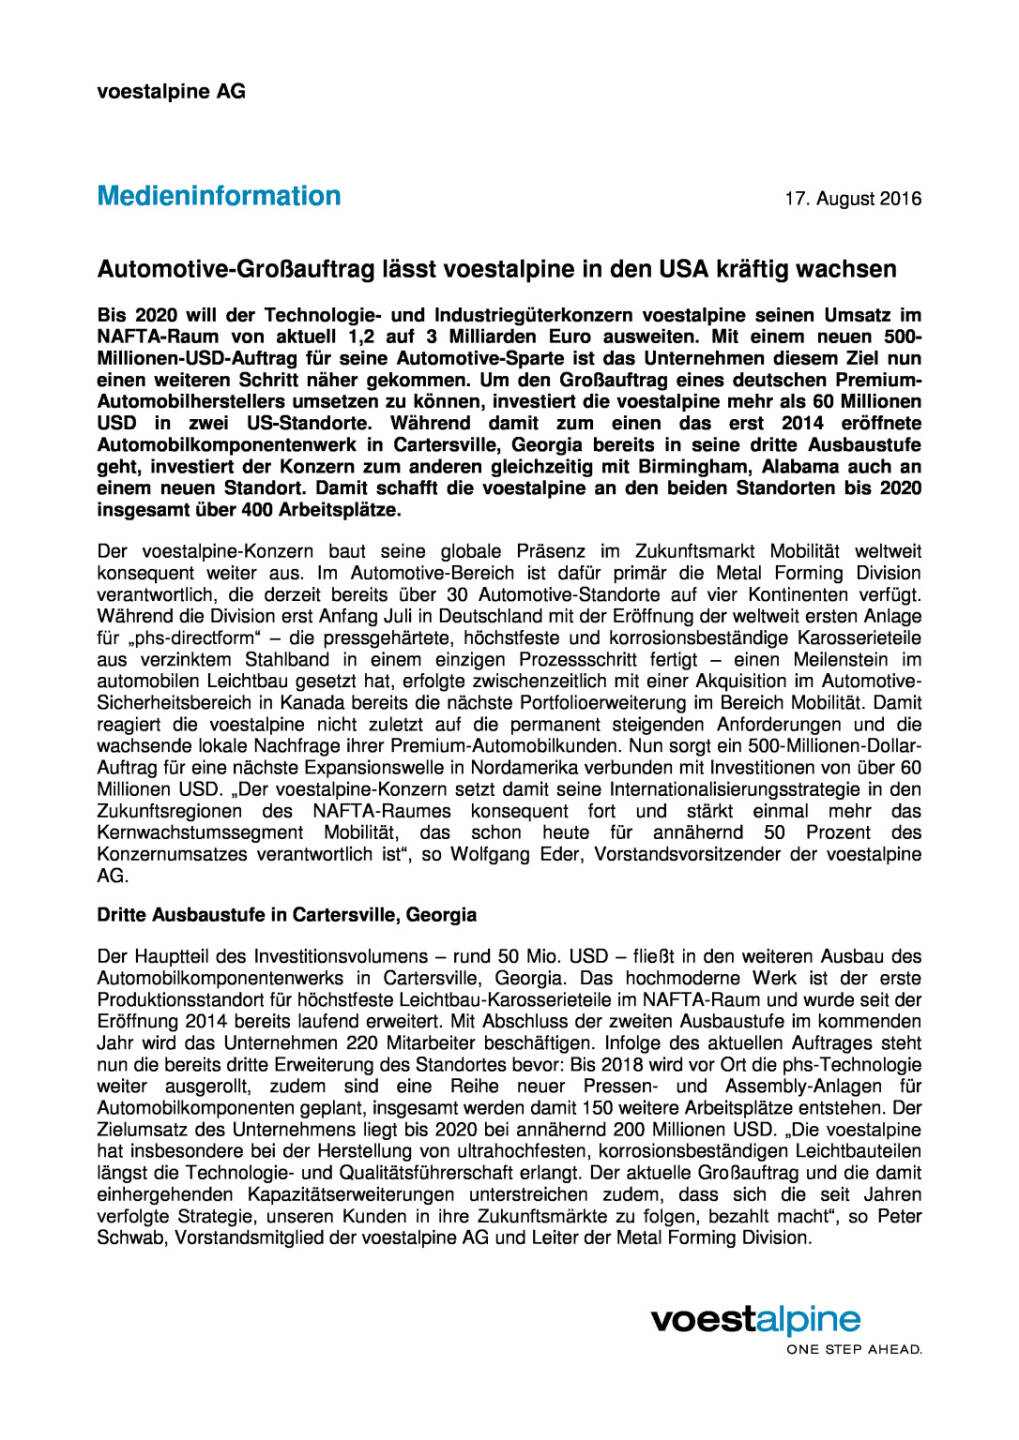  voestalpine: Automotive-Großauftrag, Seite 1/2, komplettes Dokument unter http://boerse-social.com/static/uploads/file_1624__voestalpine_automotive-grossauftrag.pdf